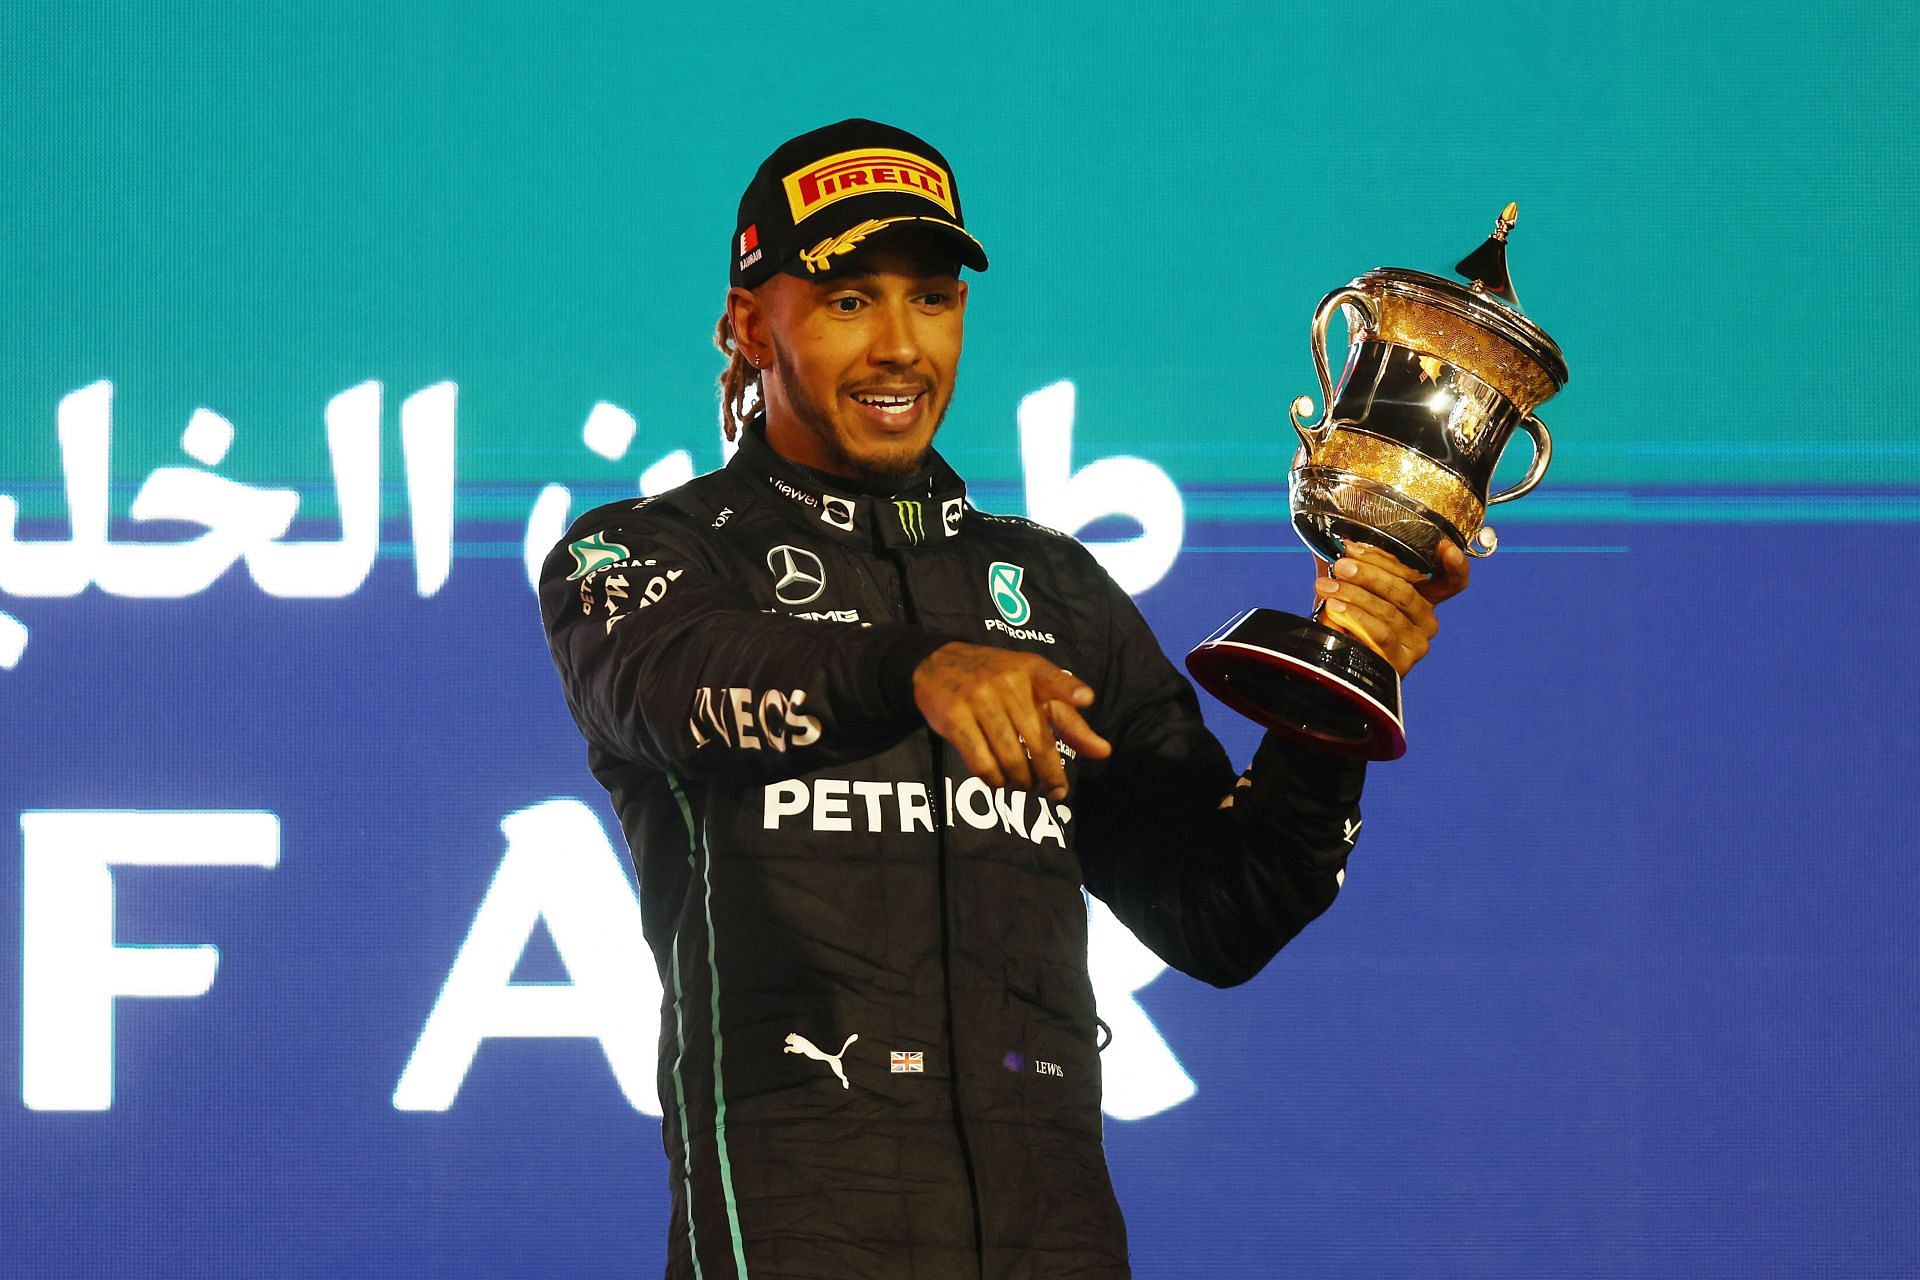 F1 Grand Prix of Bahrain - Lewis Hamilton scores another podium.